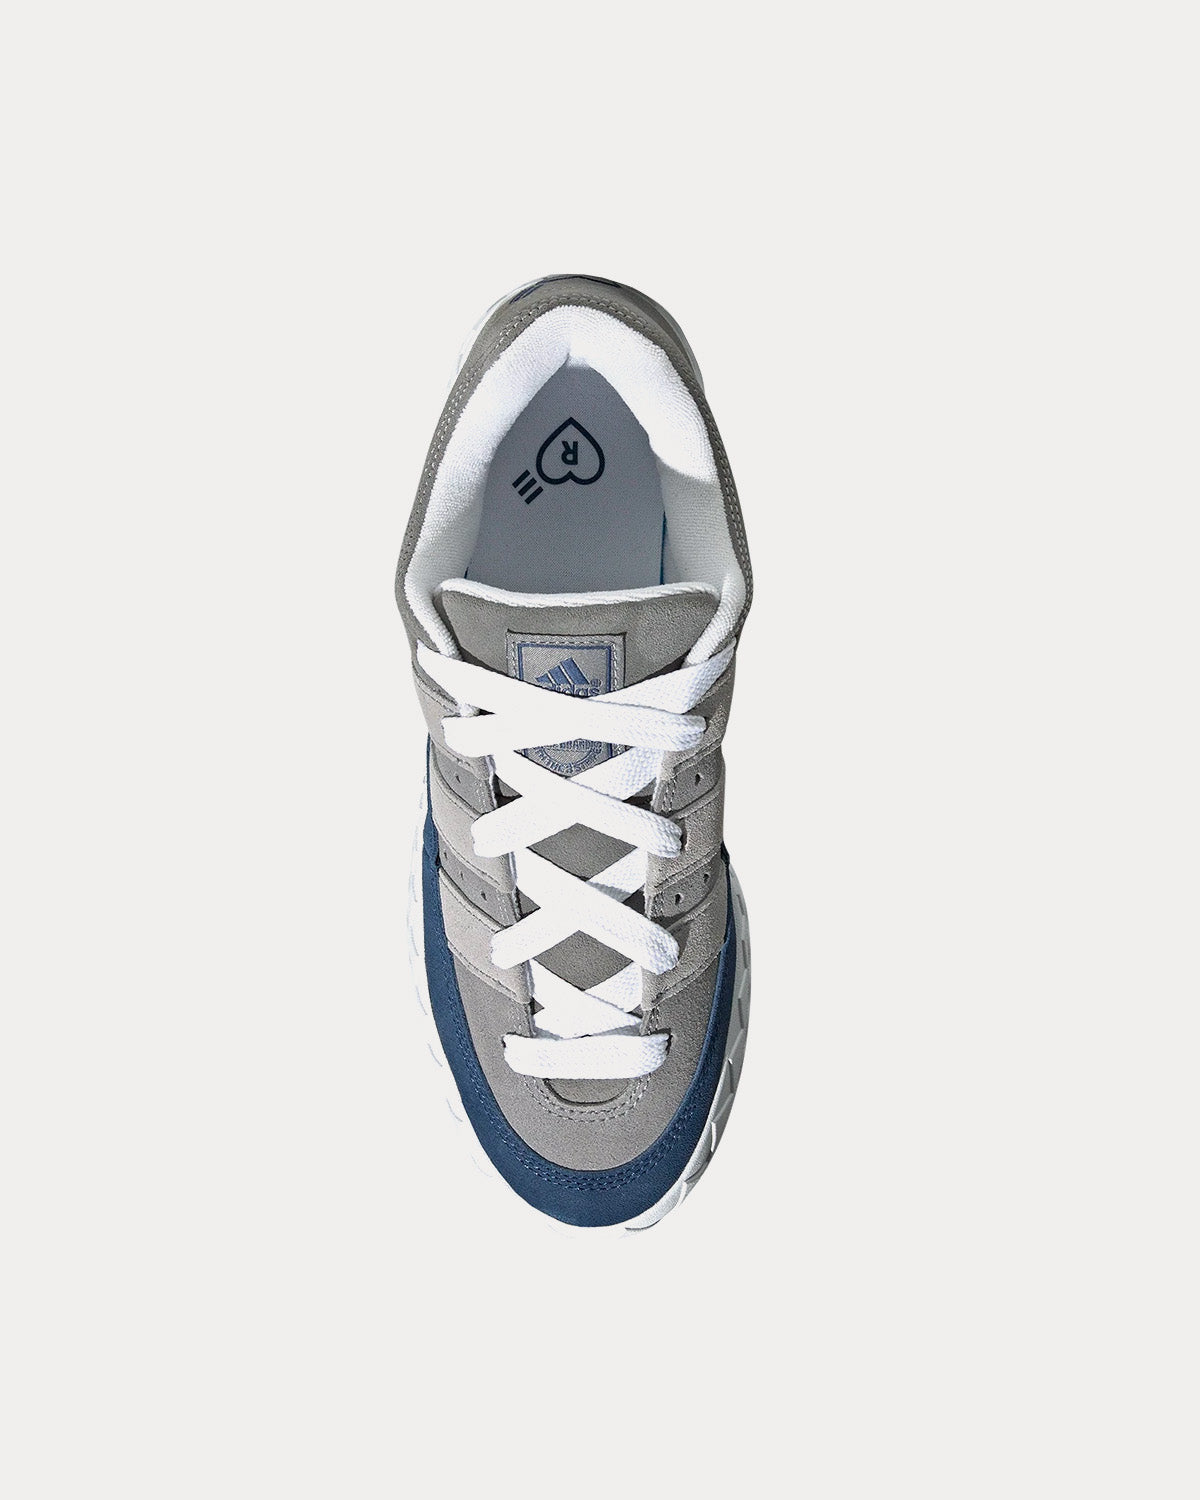 Adidas x Human Made Adimatic Grey Three / Clear Onix / Tech Indigo Low Top  Sneakers - Sneak in Peace